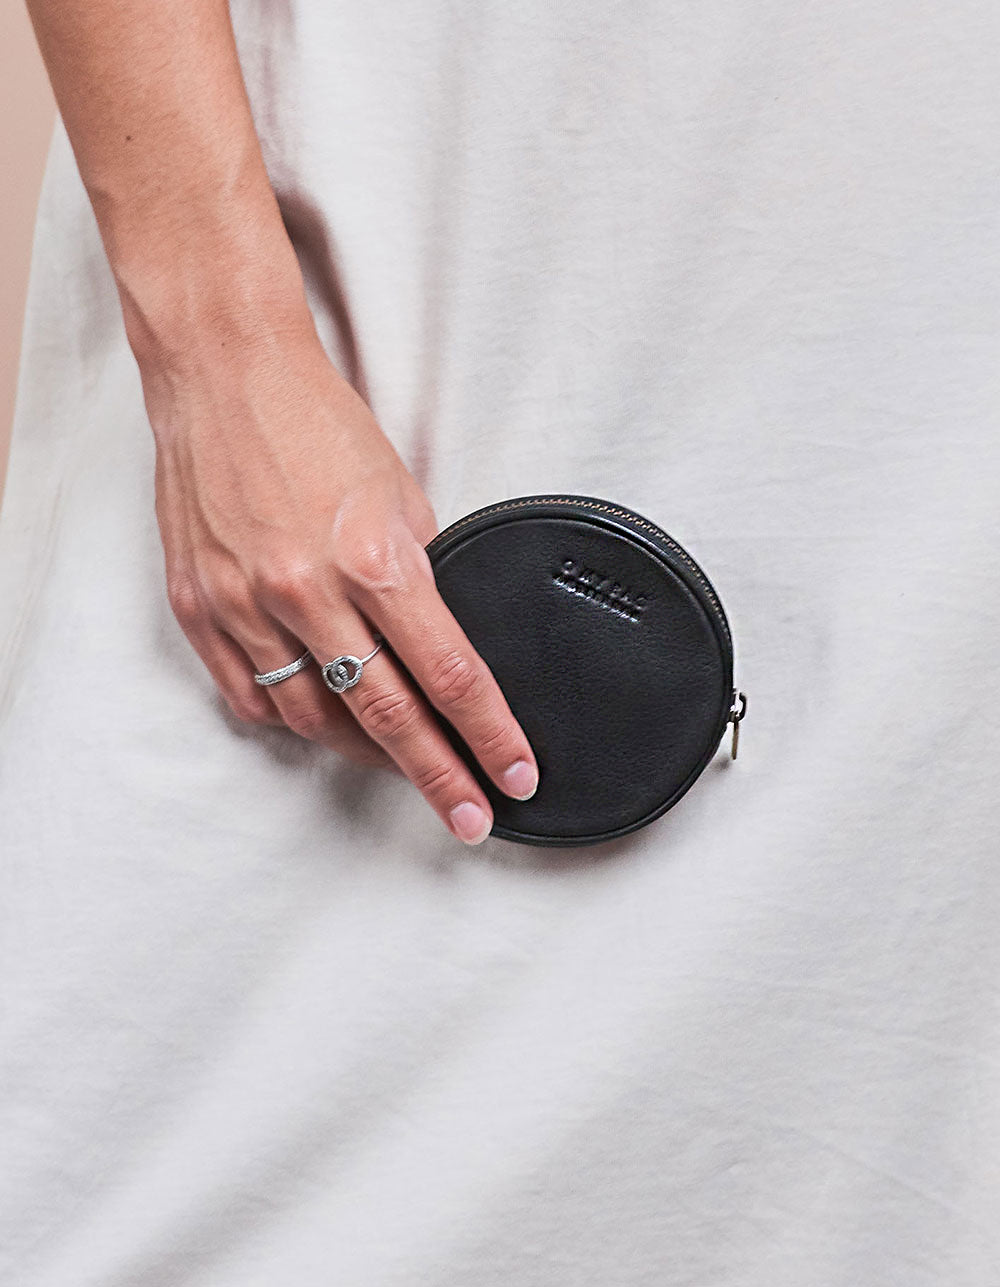 Luna Purse Black Soft Grain Leather. Circular coin purse, wallet for men and women. Model image.